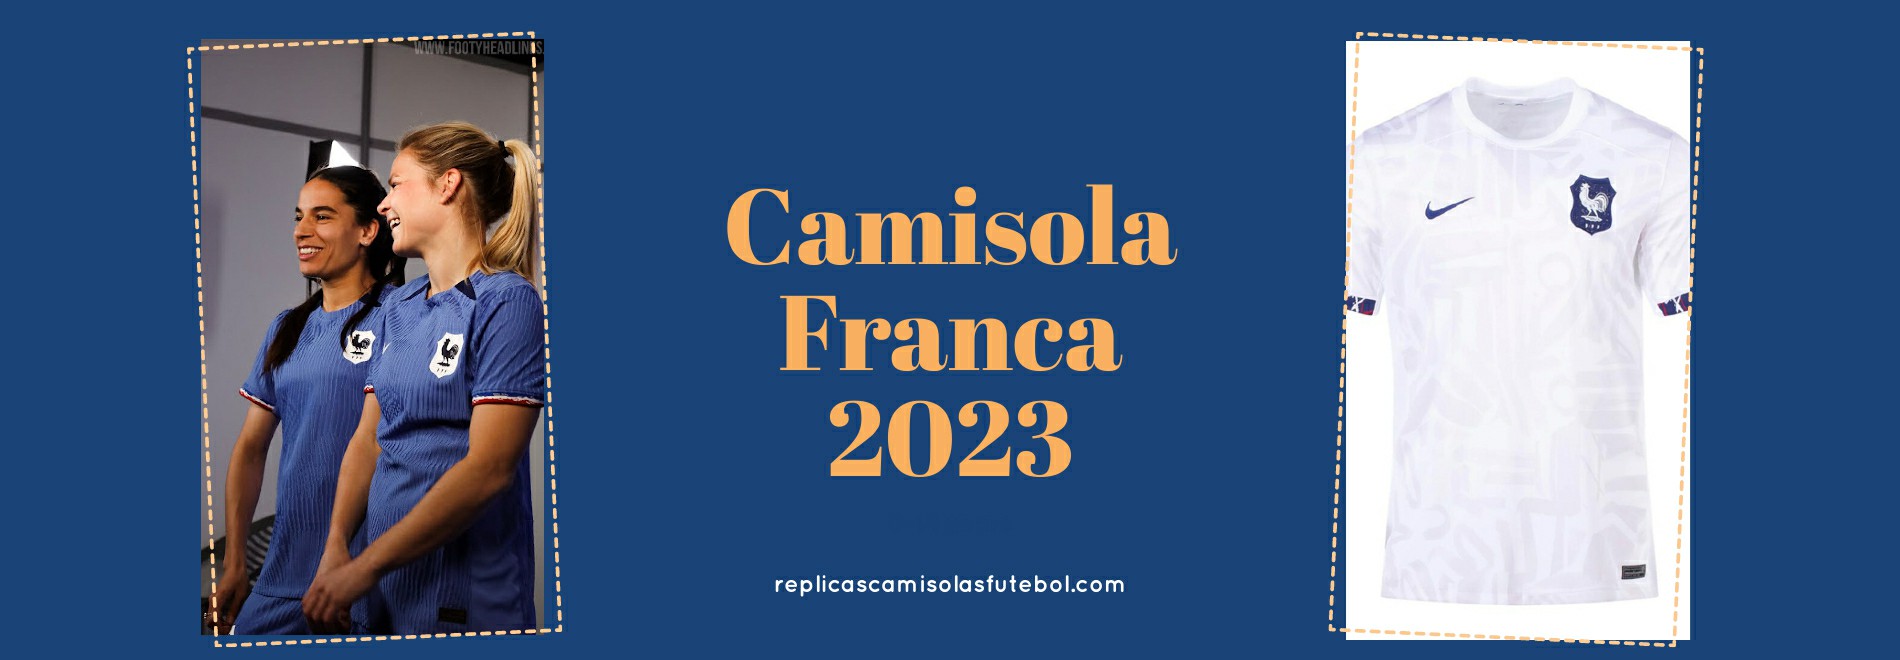 Camisola Franca 2023-2024